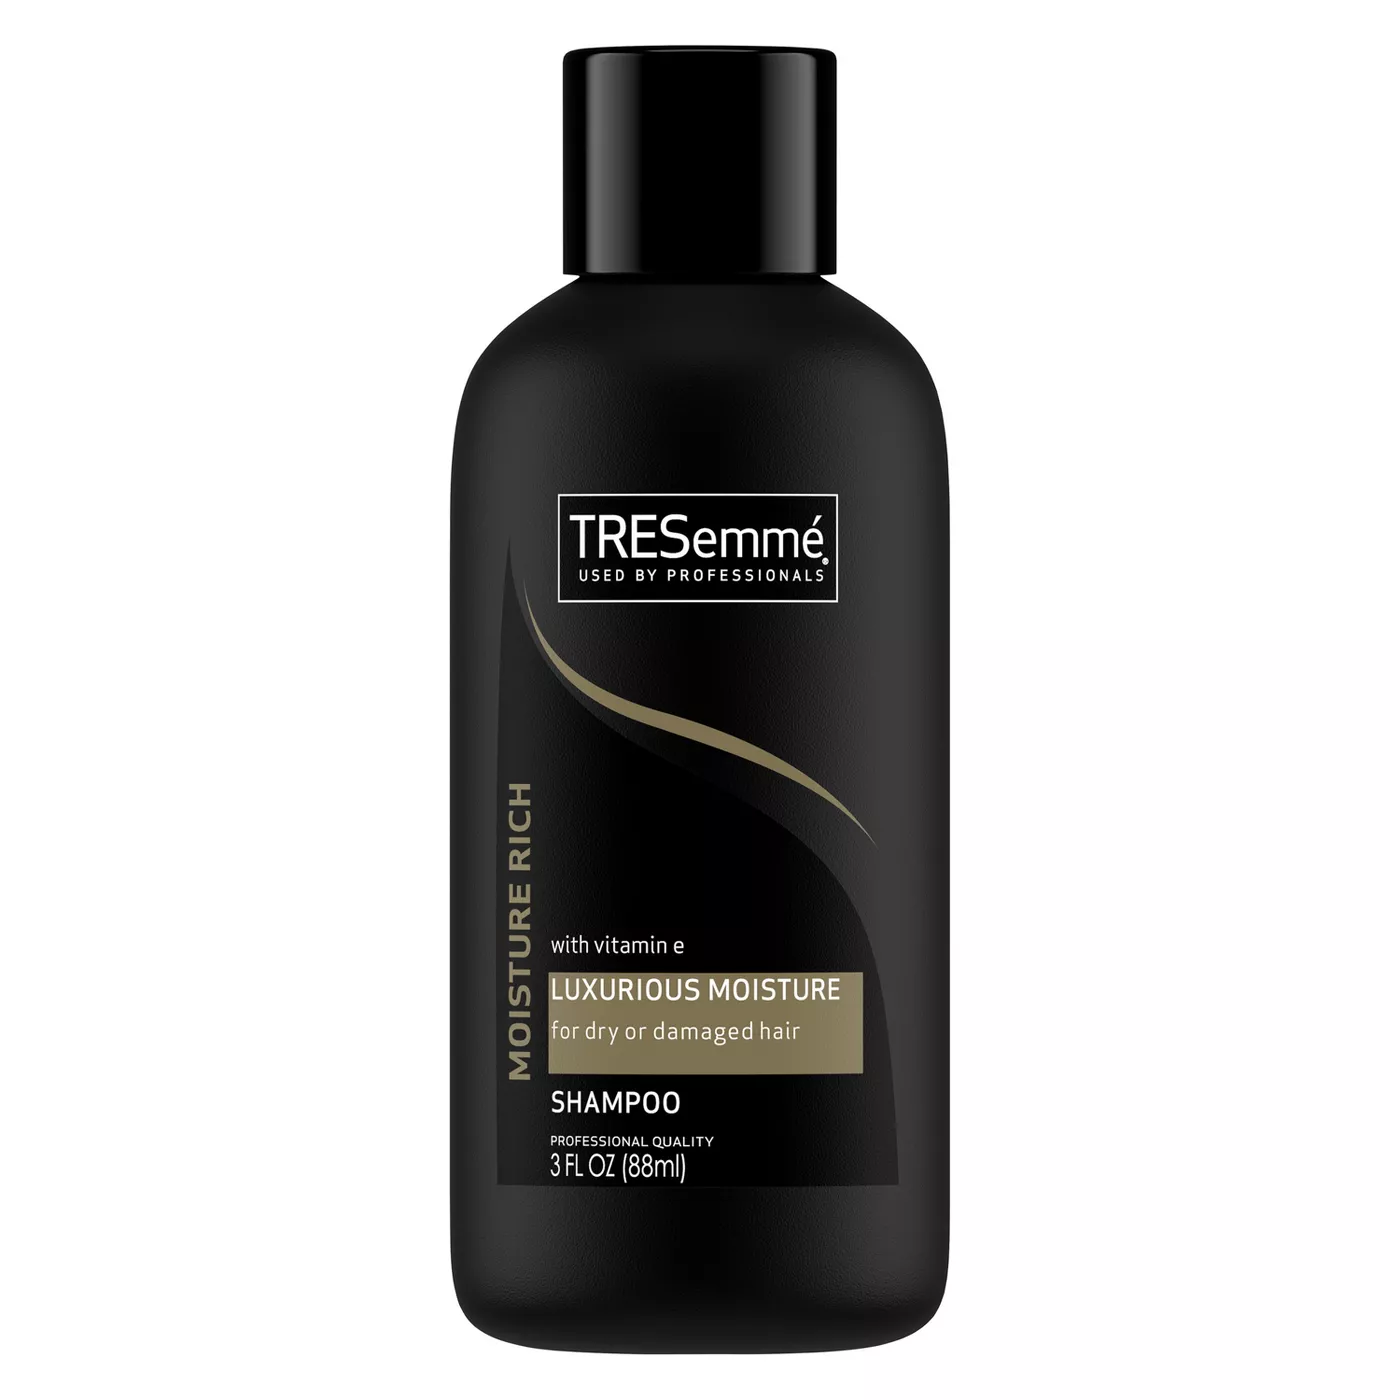 TRESemme Moisture Rich Shampoo - Travel Size - 3 fl oz - image 1 of 4